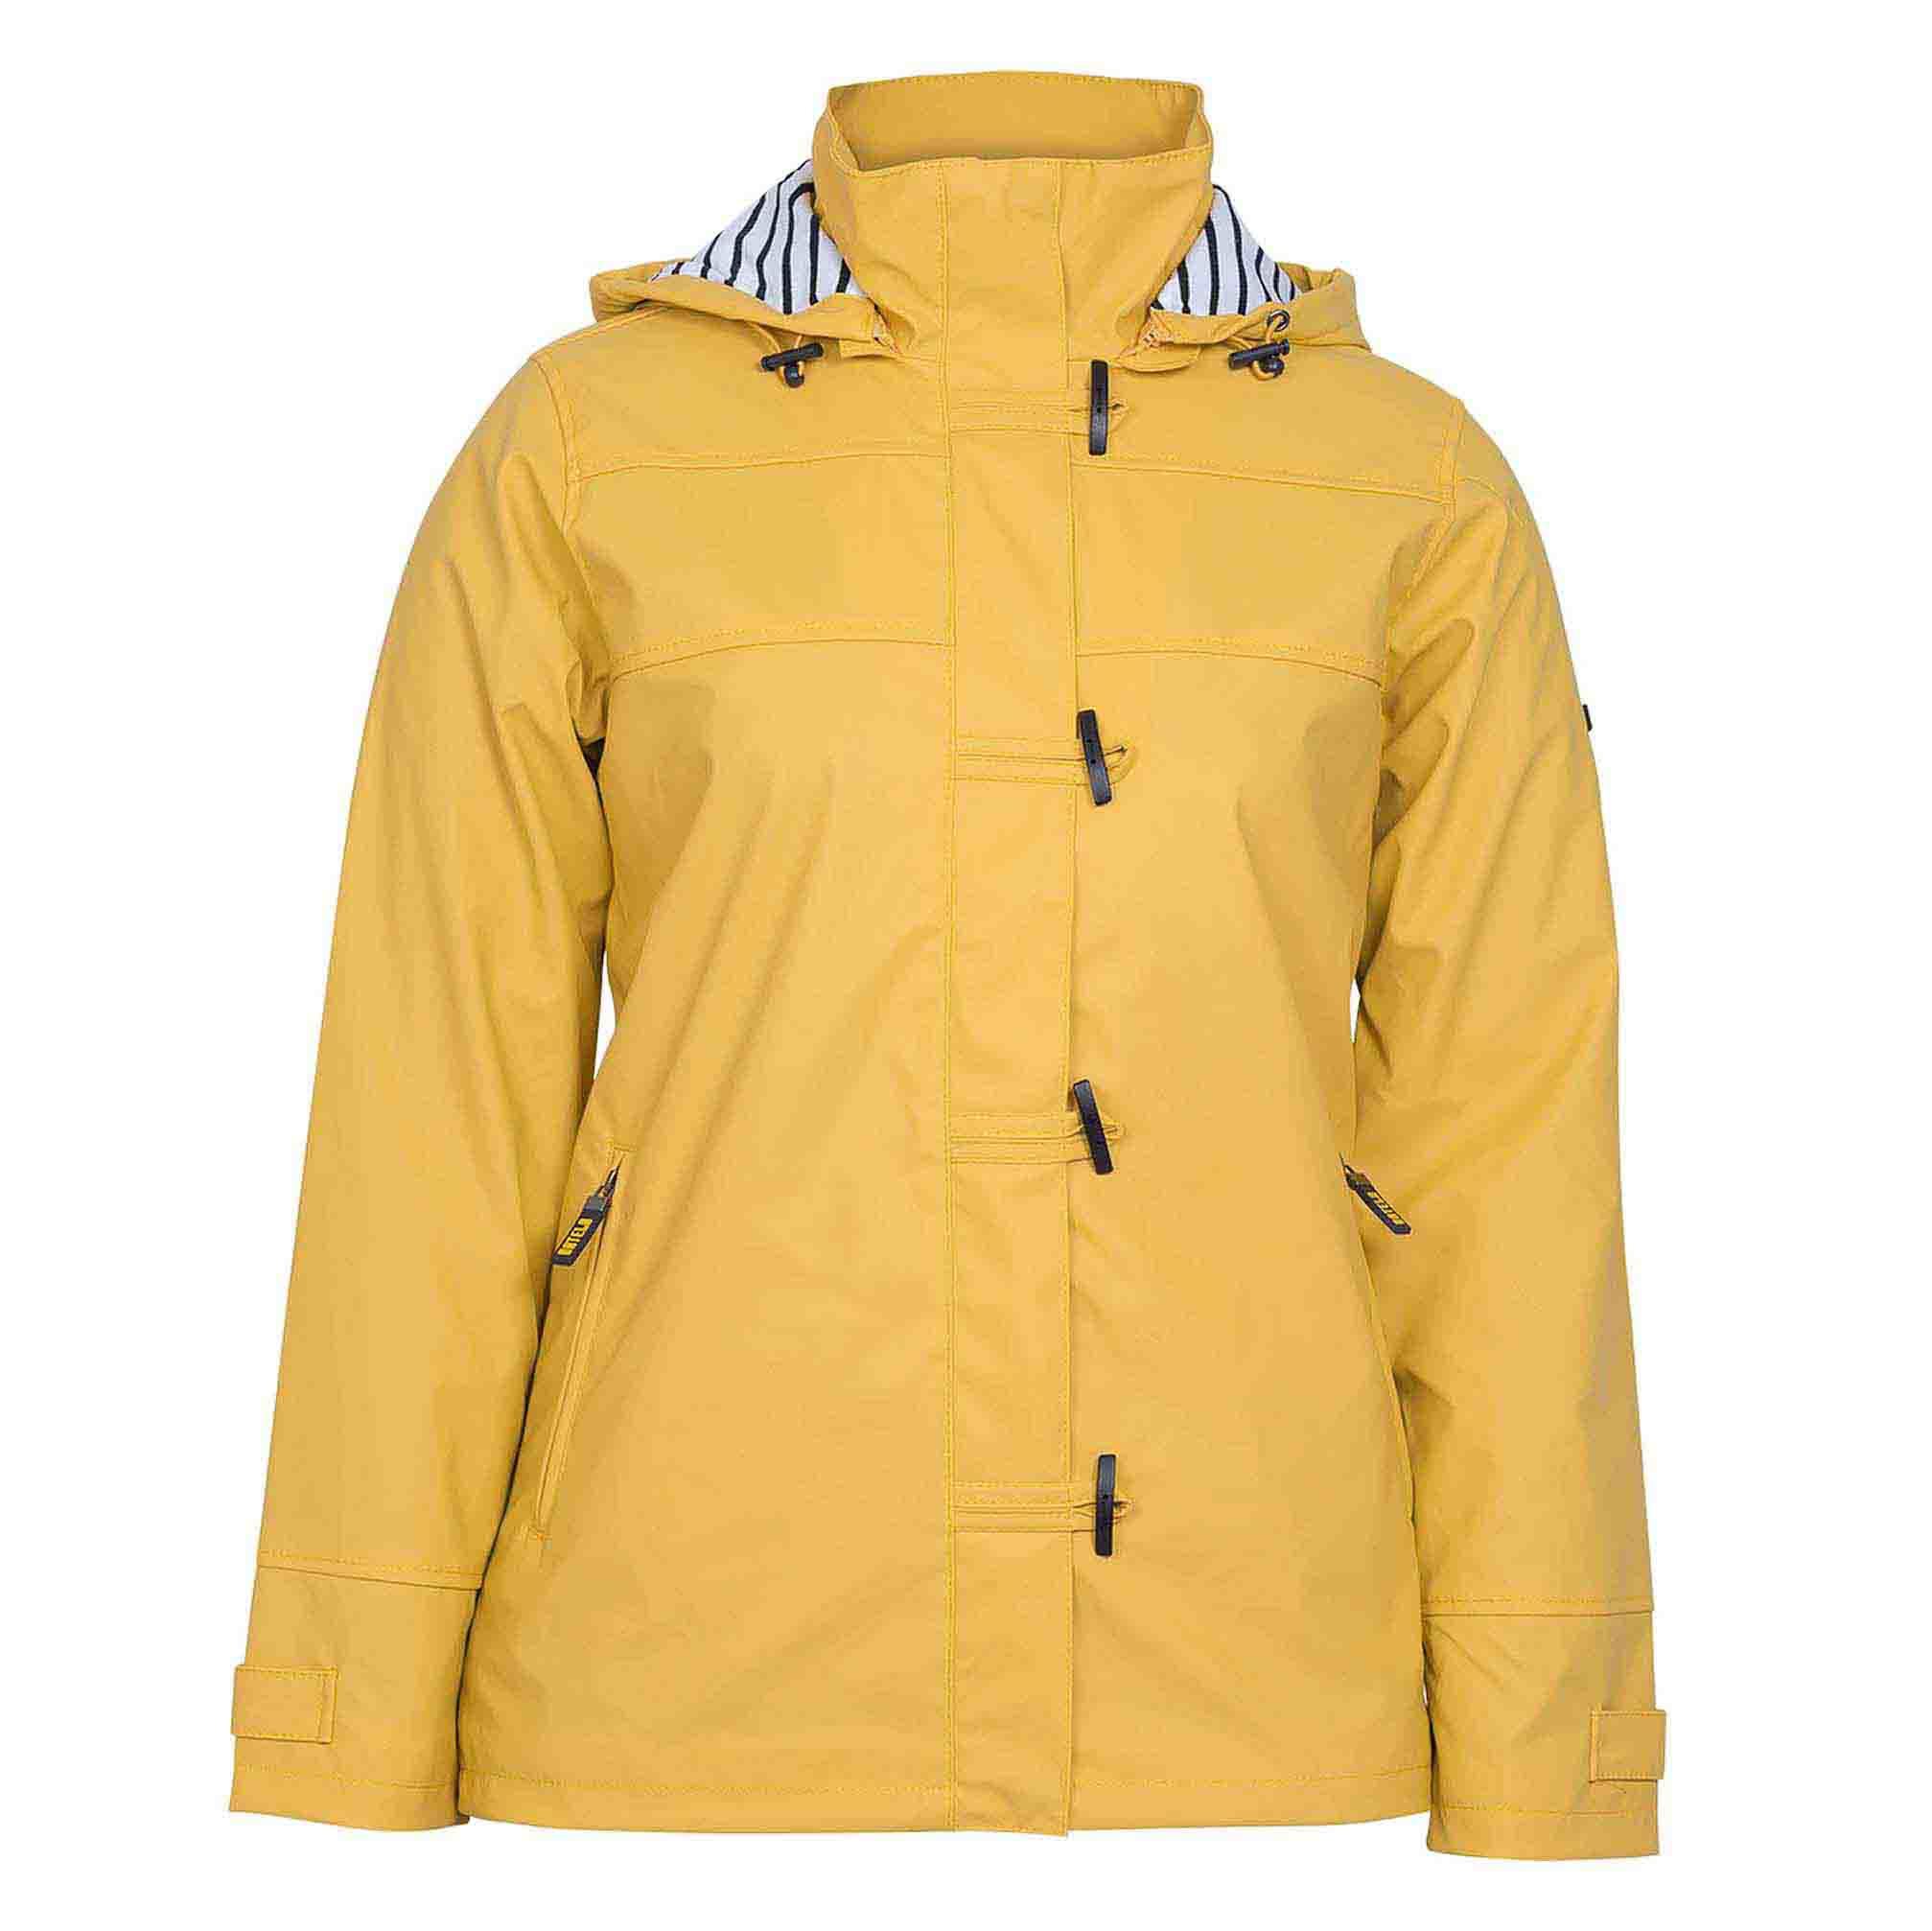 New Batela® Yellow Raincoat